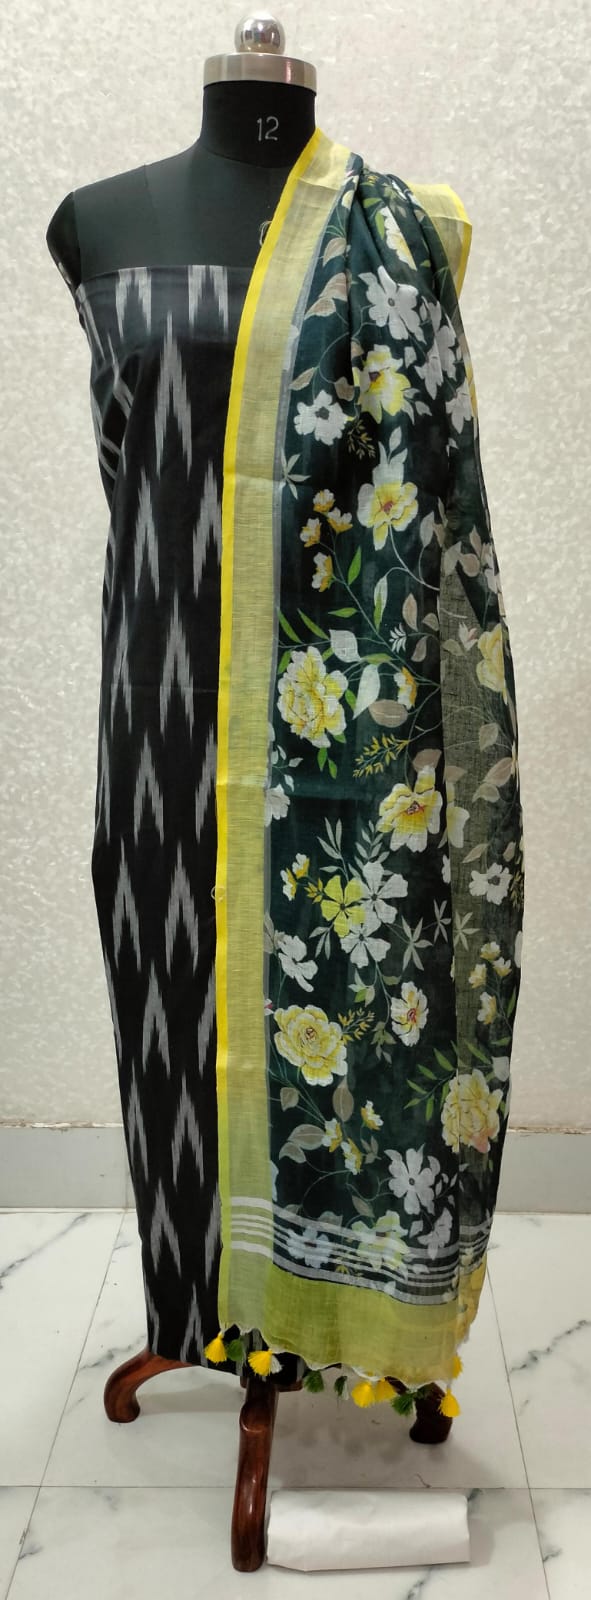 Black Handloom Ikkat Top and Printed Linen Dupatta 2Pc Unstitched Dress Material